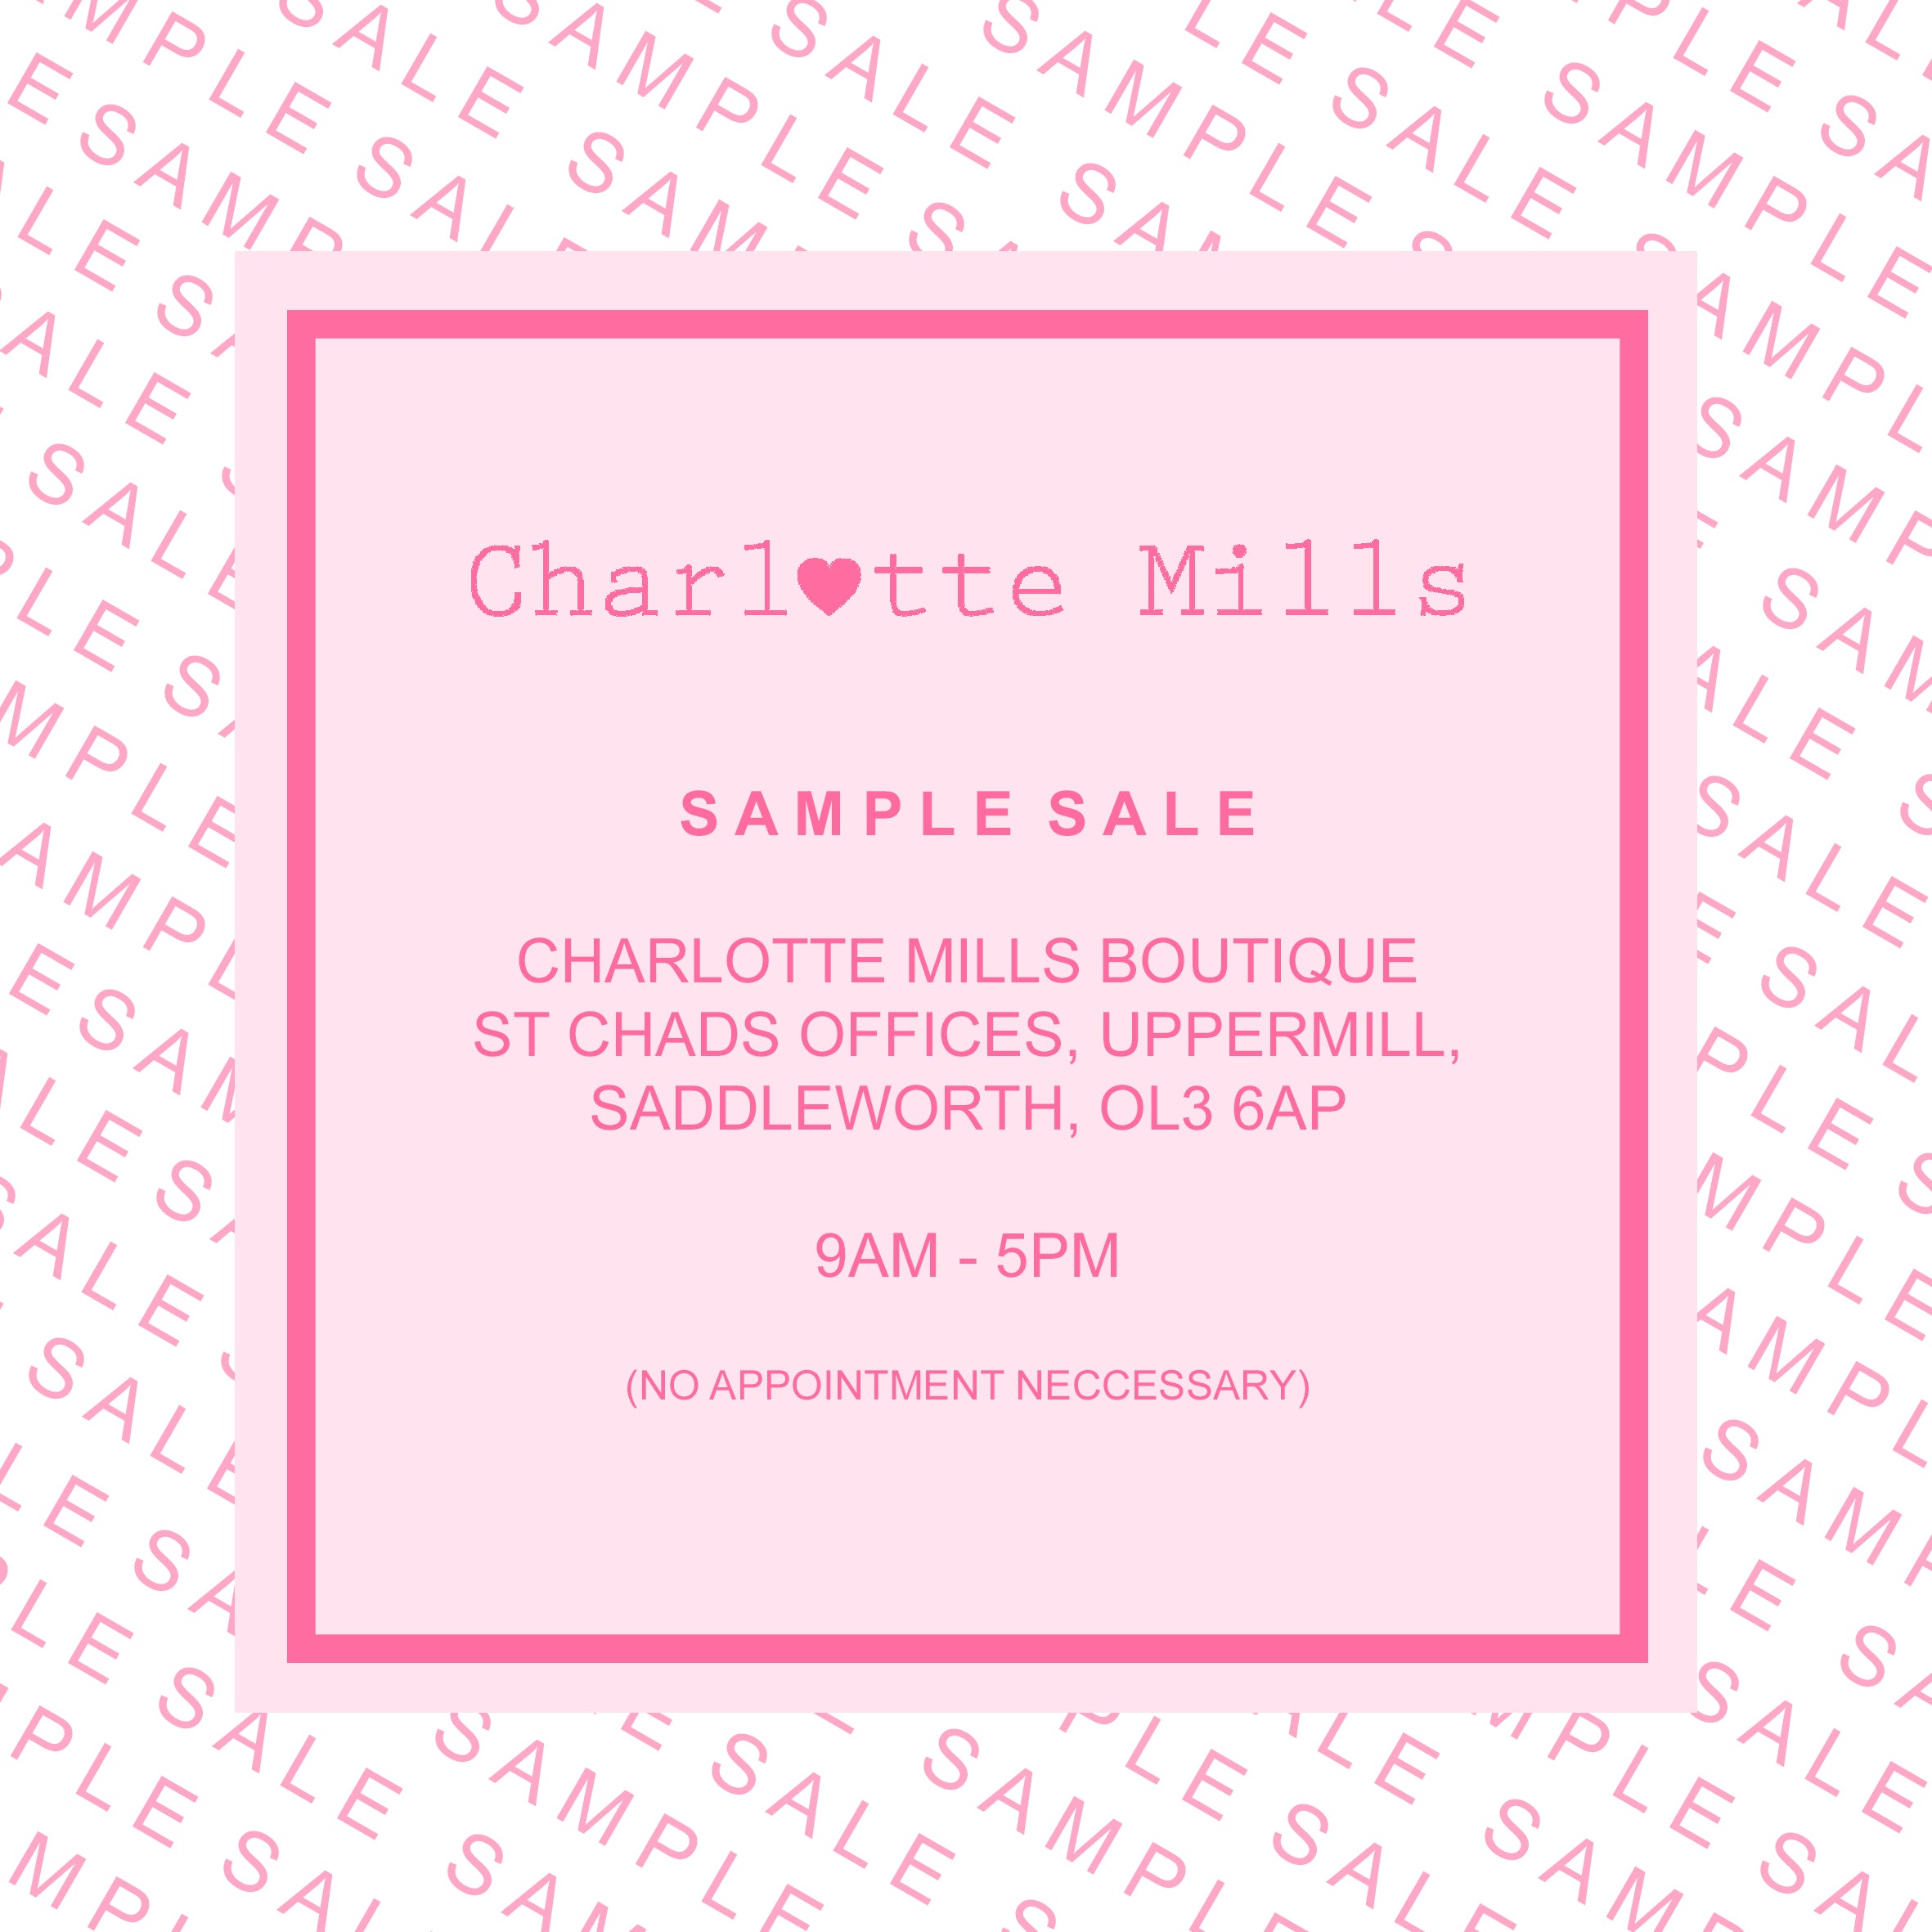 charlottemills-samplesale-shoesale-weddingshoesale